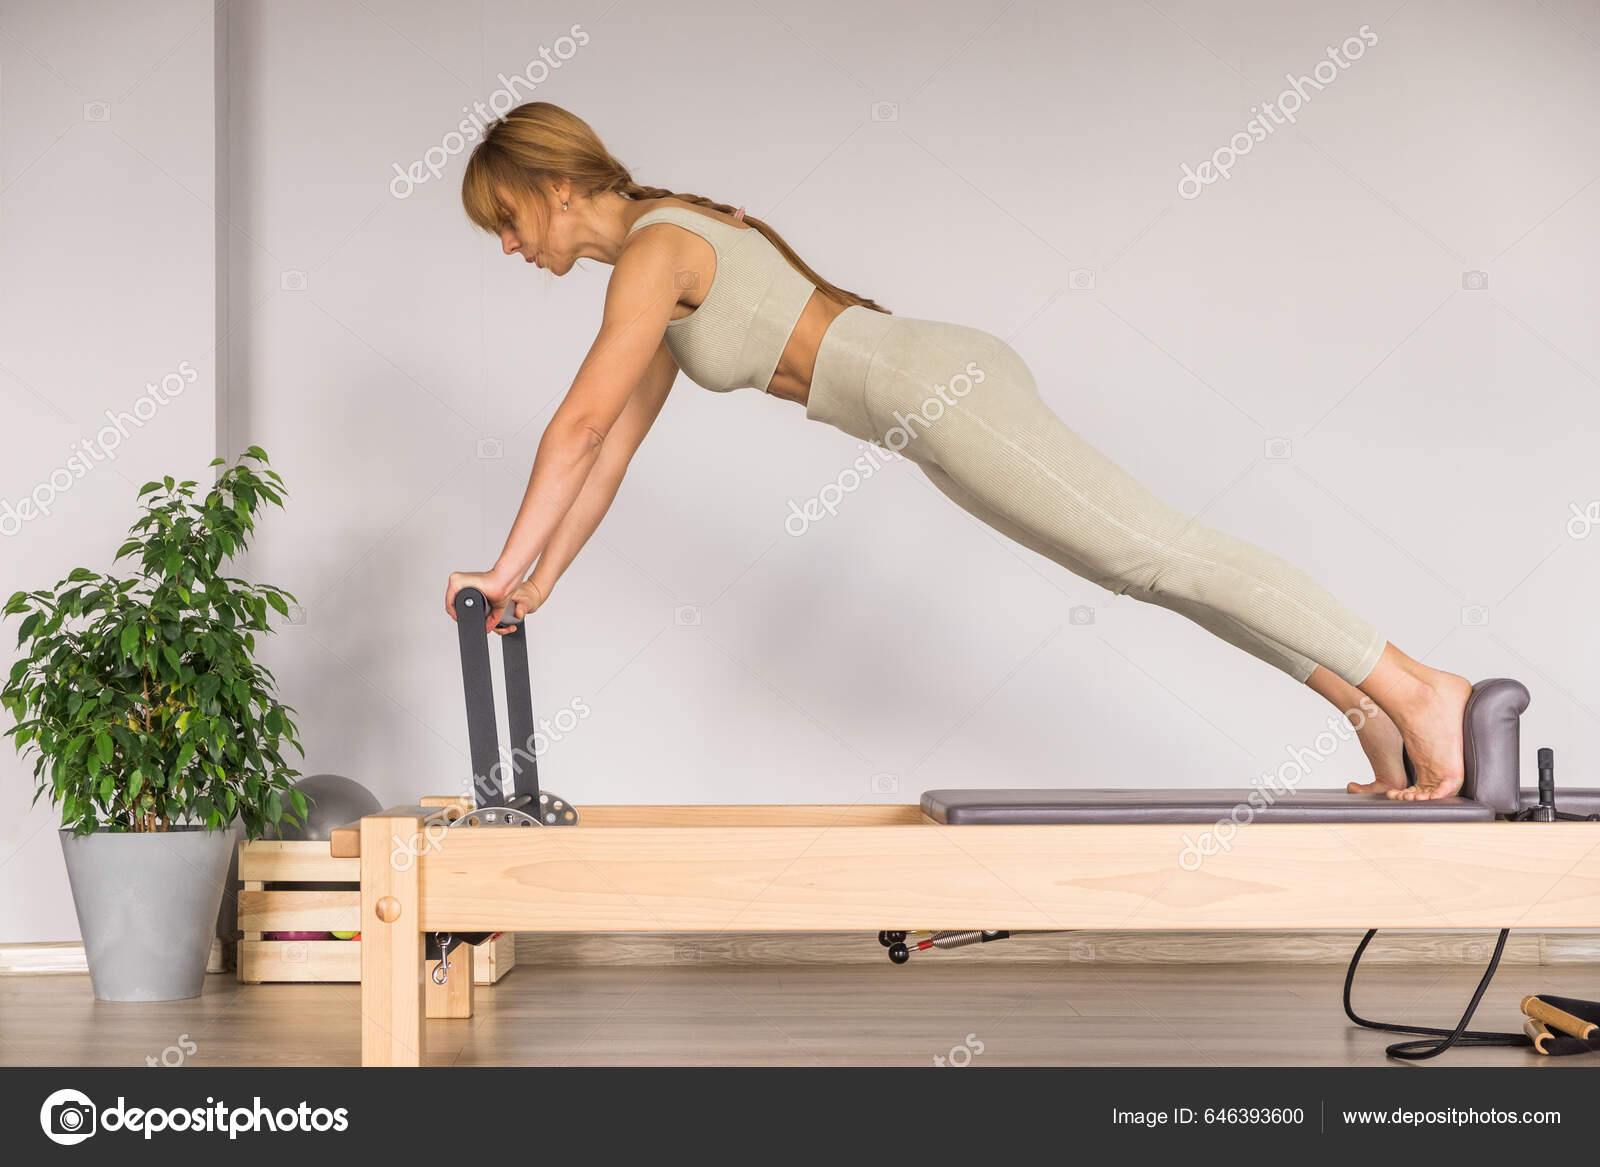 https://st5.depositphotos.com/6430496/64639/i/1600/depositphotos_646393600-stock-photo-woman-training-pilates-reformer-bed.jpg